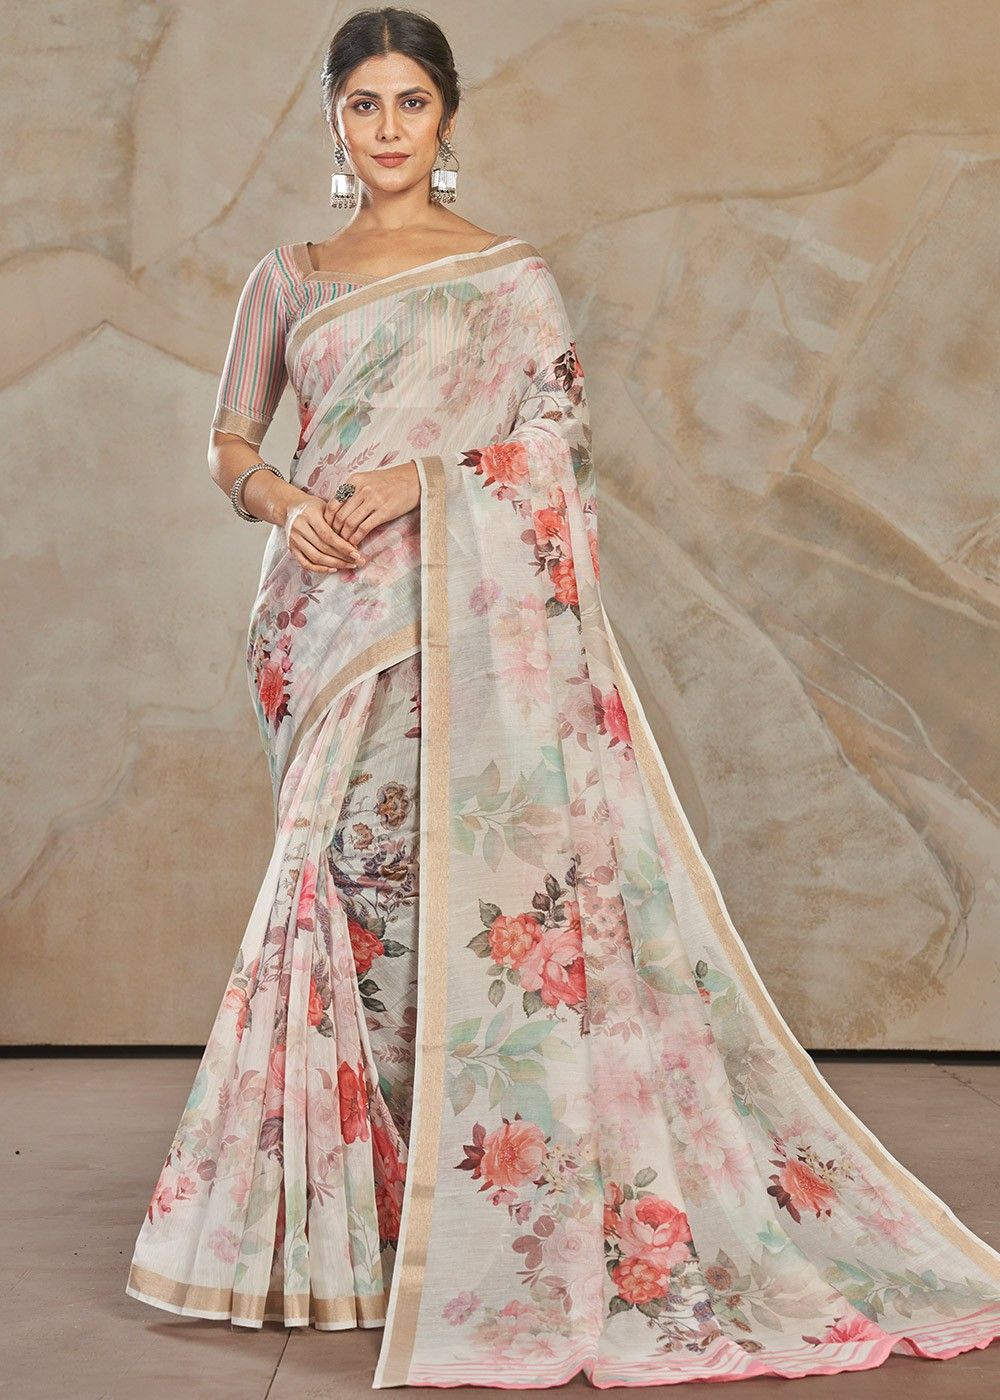 Best Price Floral Print Saree in Cotton Light Pink color | SARV157884